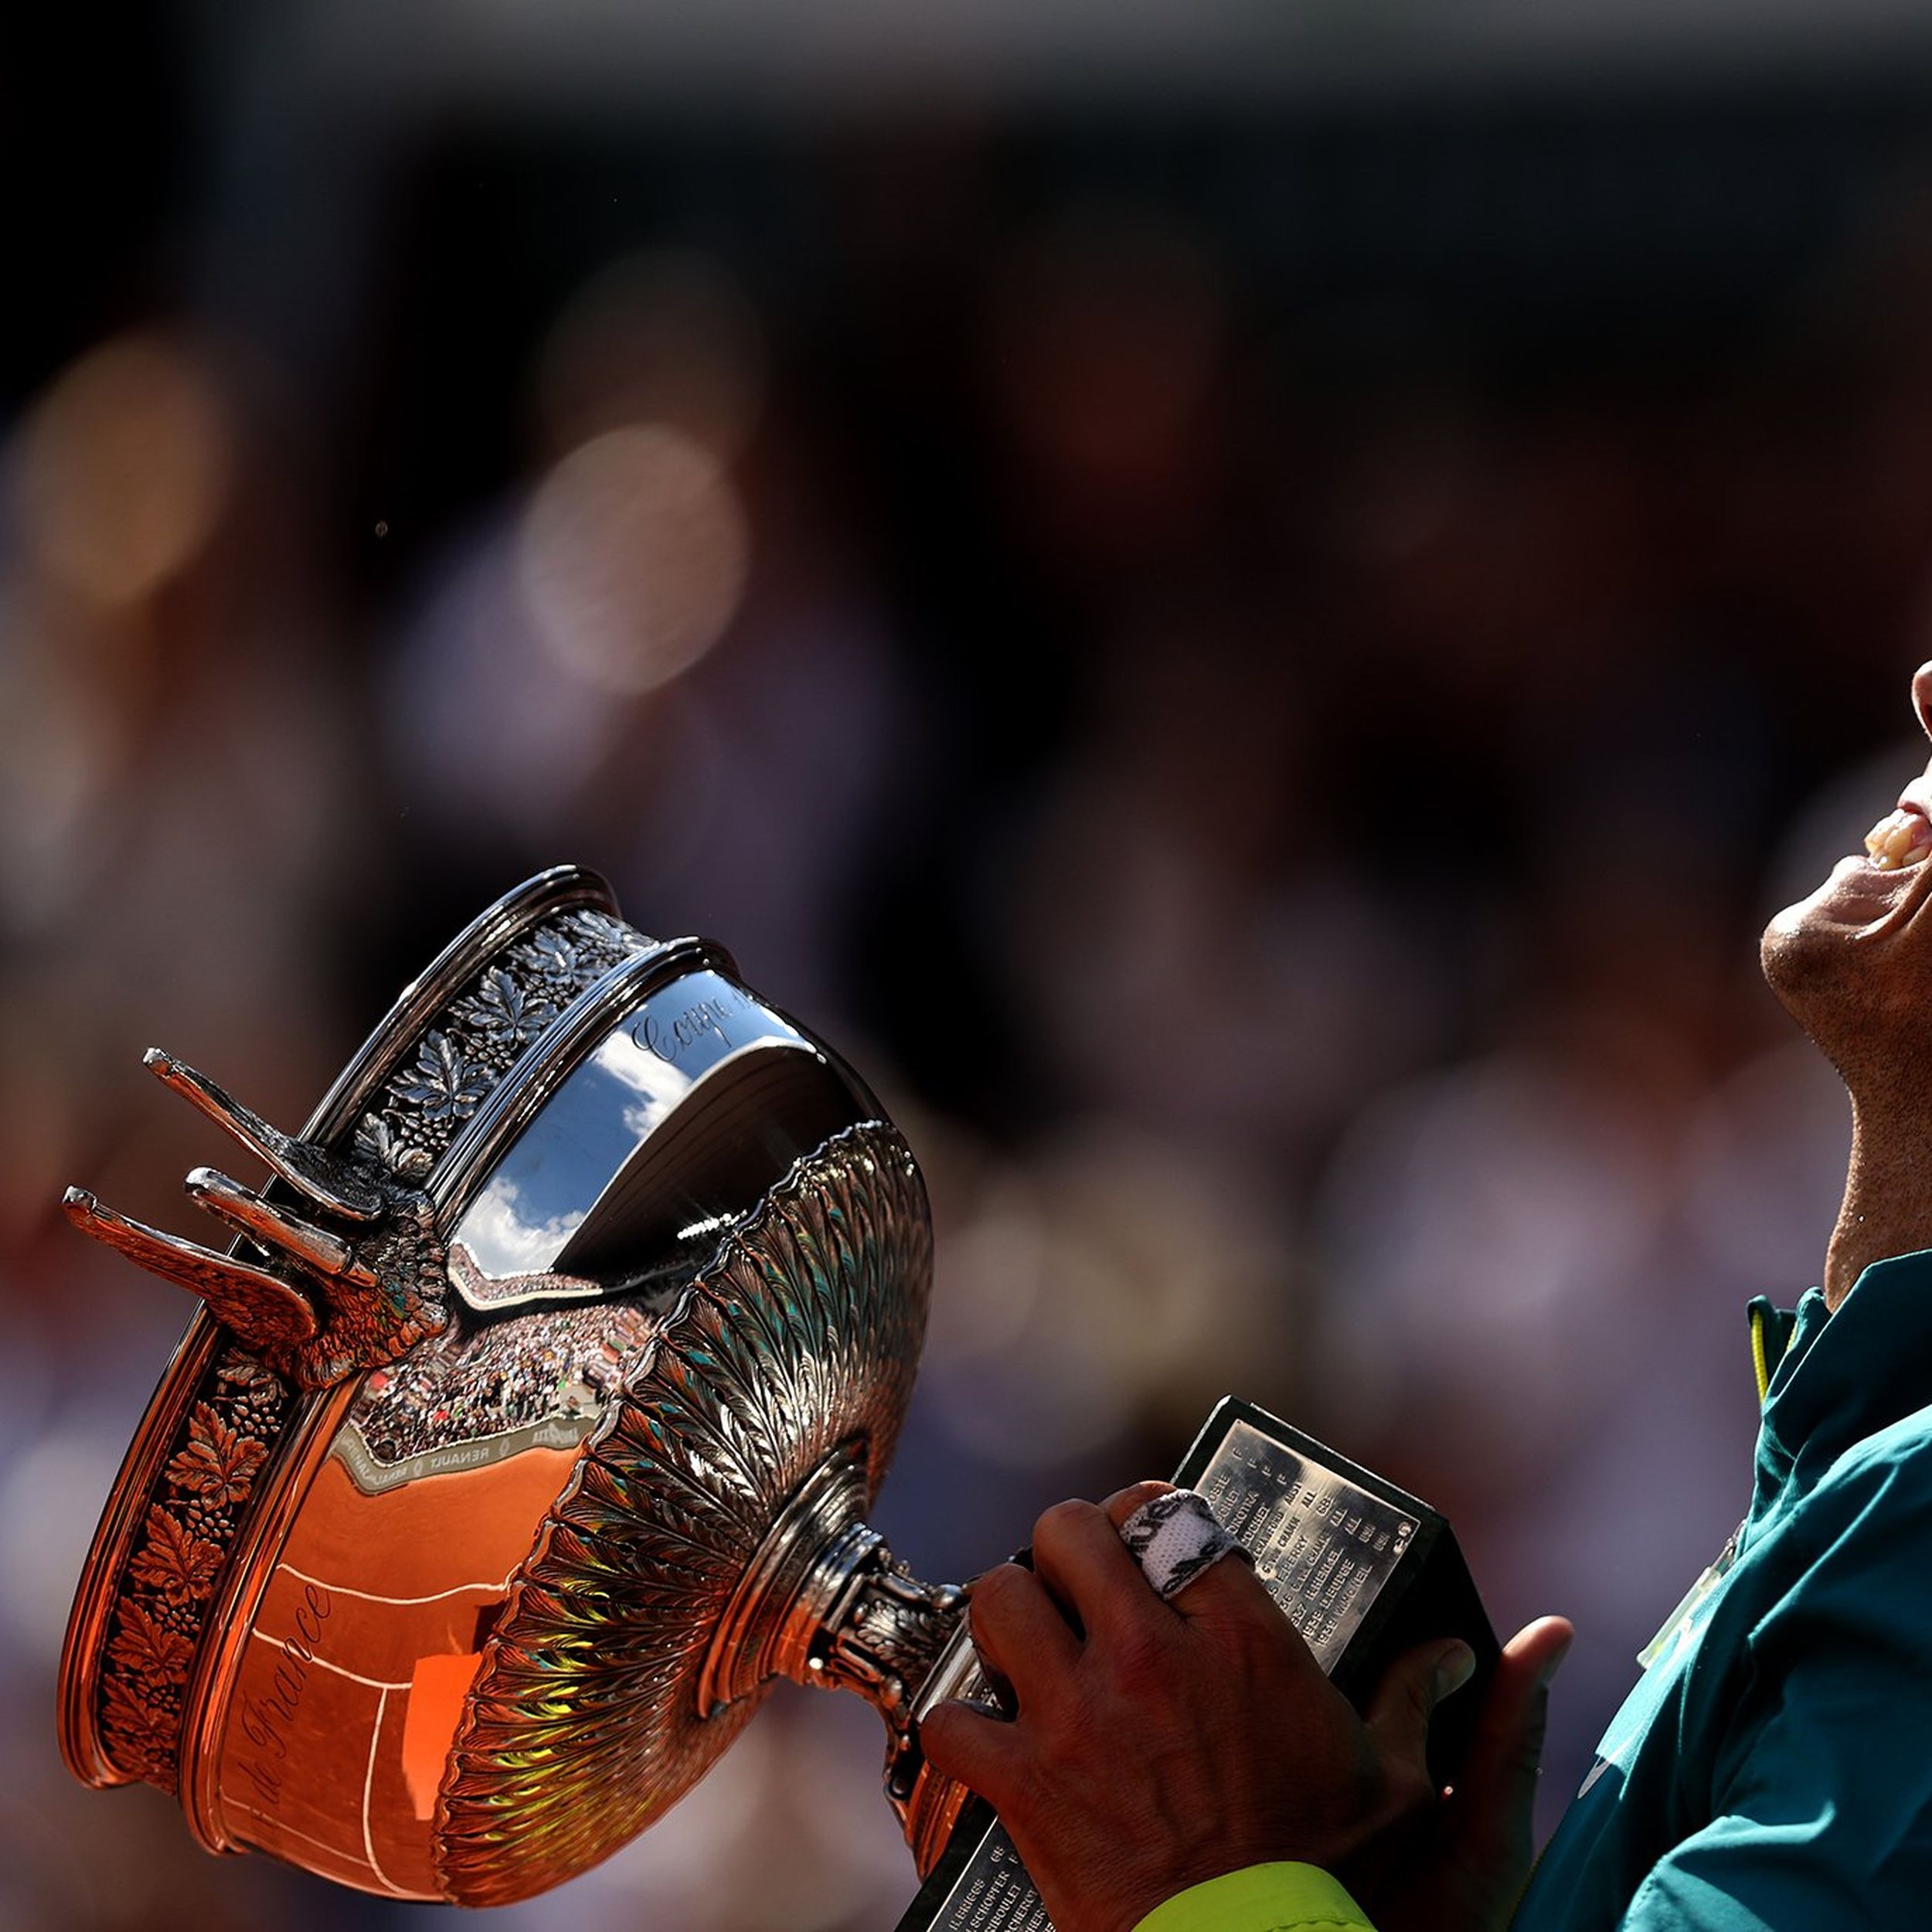 Roland Garros Royalty: Gustavo Kuerten, 3-time French Open champion